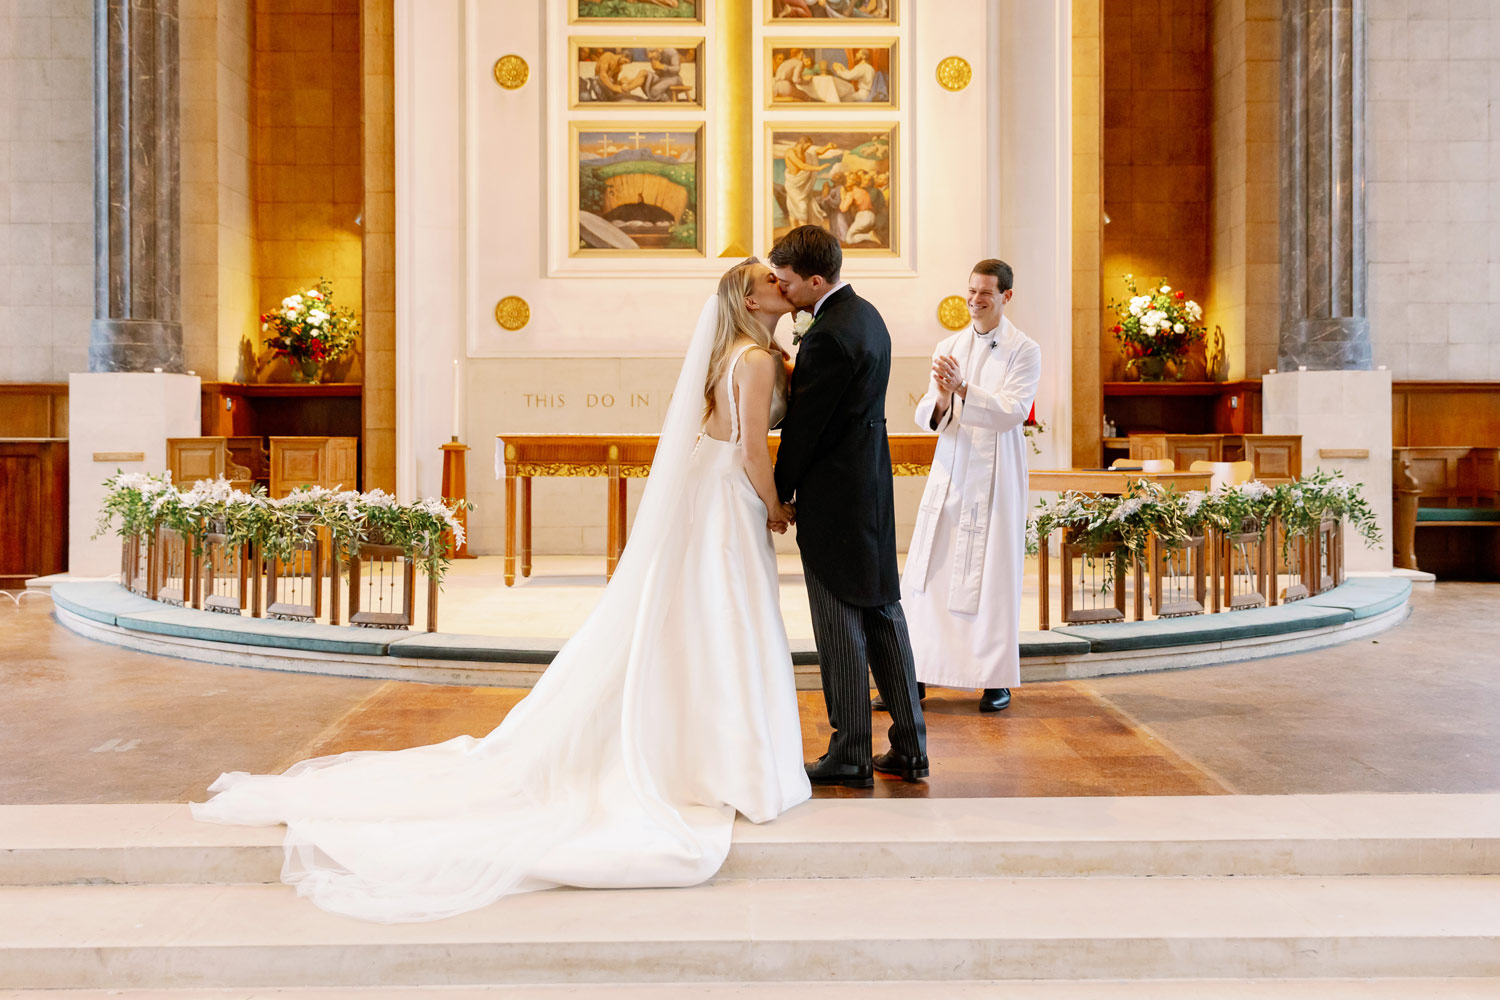 A bride and groom kiss at their Islington wedding